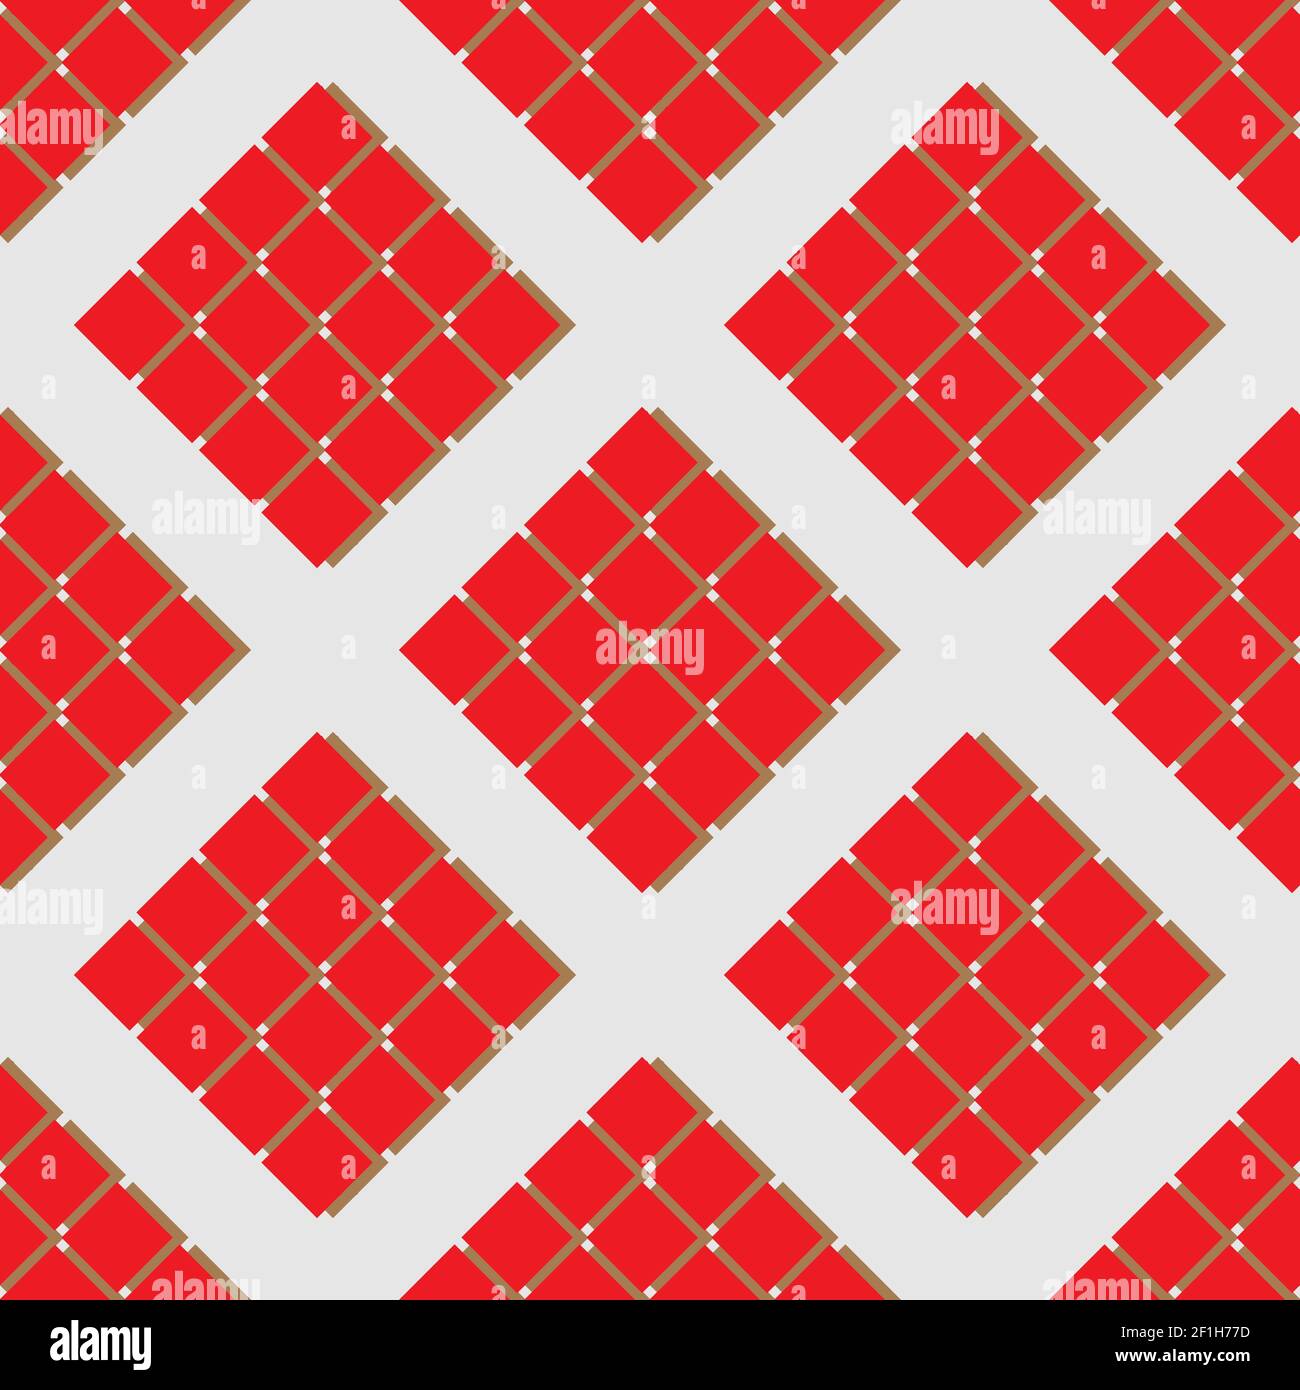 Seamless pattern of rhombuses Stock Photo